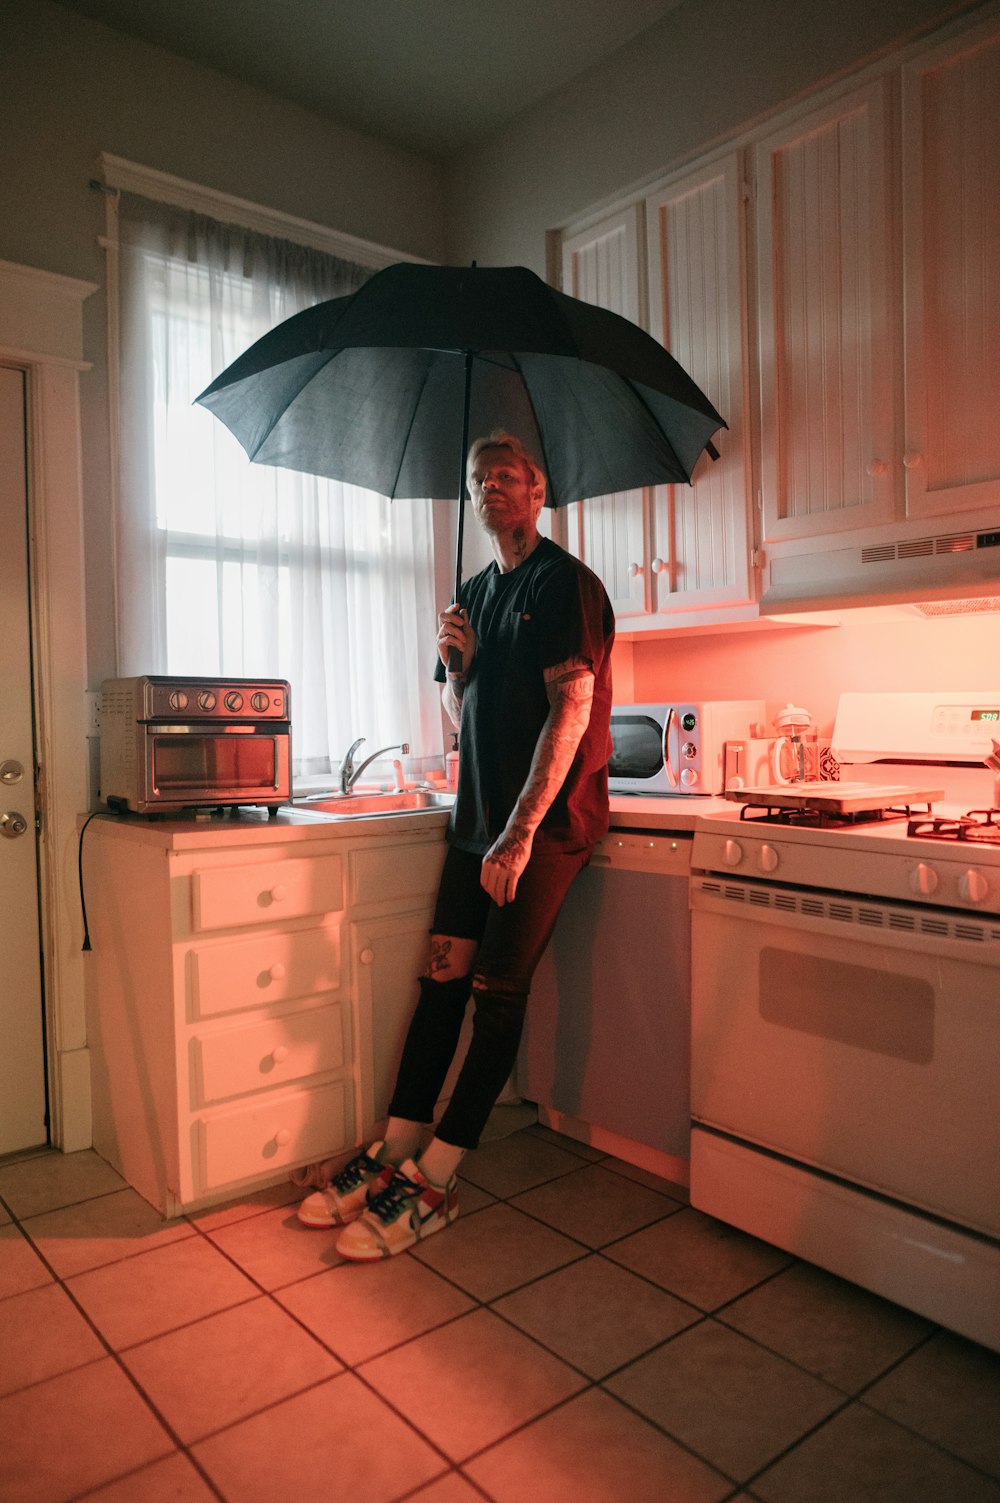 a man standing under an umbrella in a kitchen